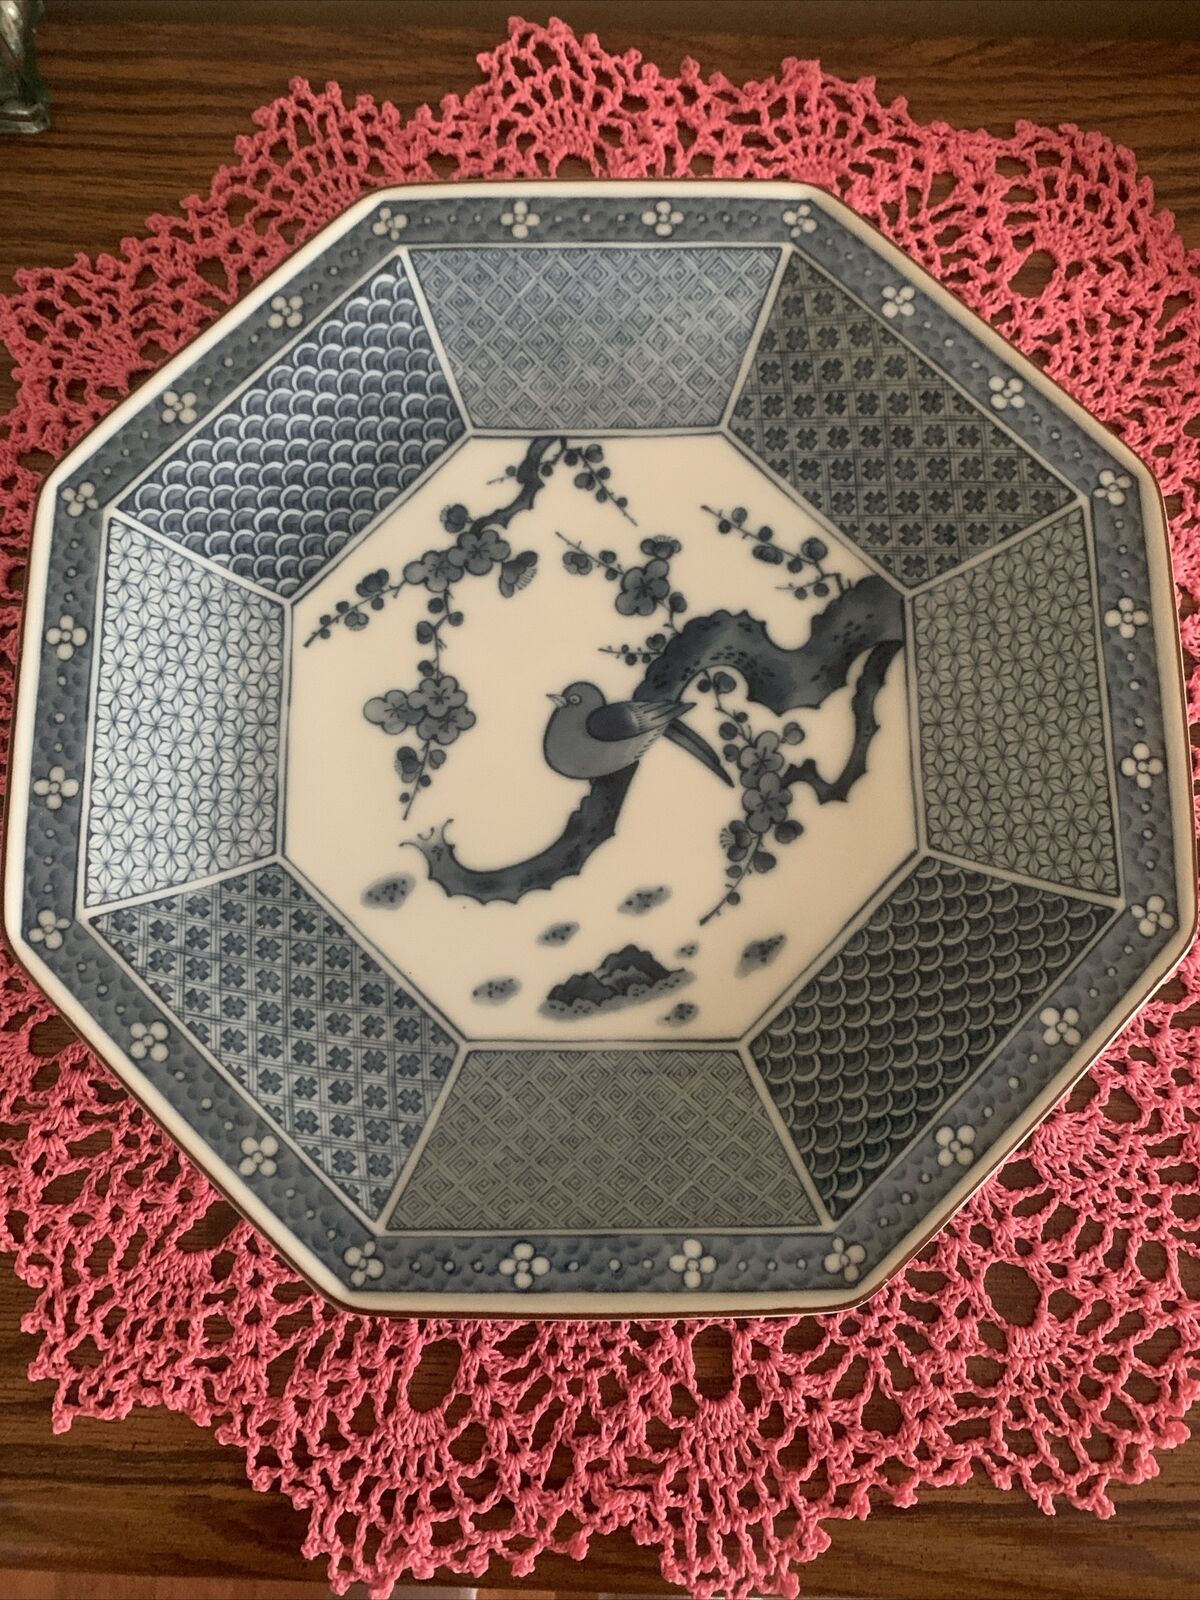 Rare Tiffany & Co Kozan gama japan large shallow bowl chinoiserie